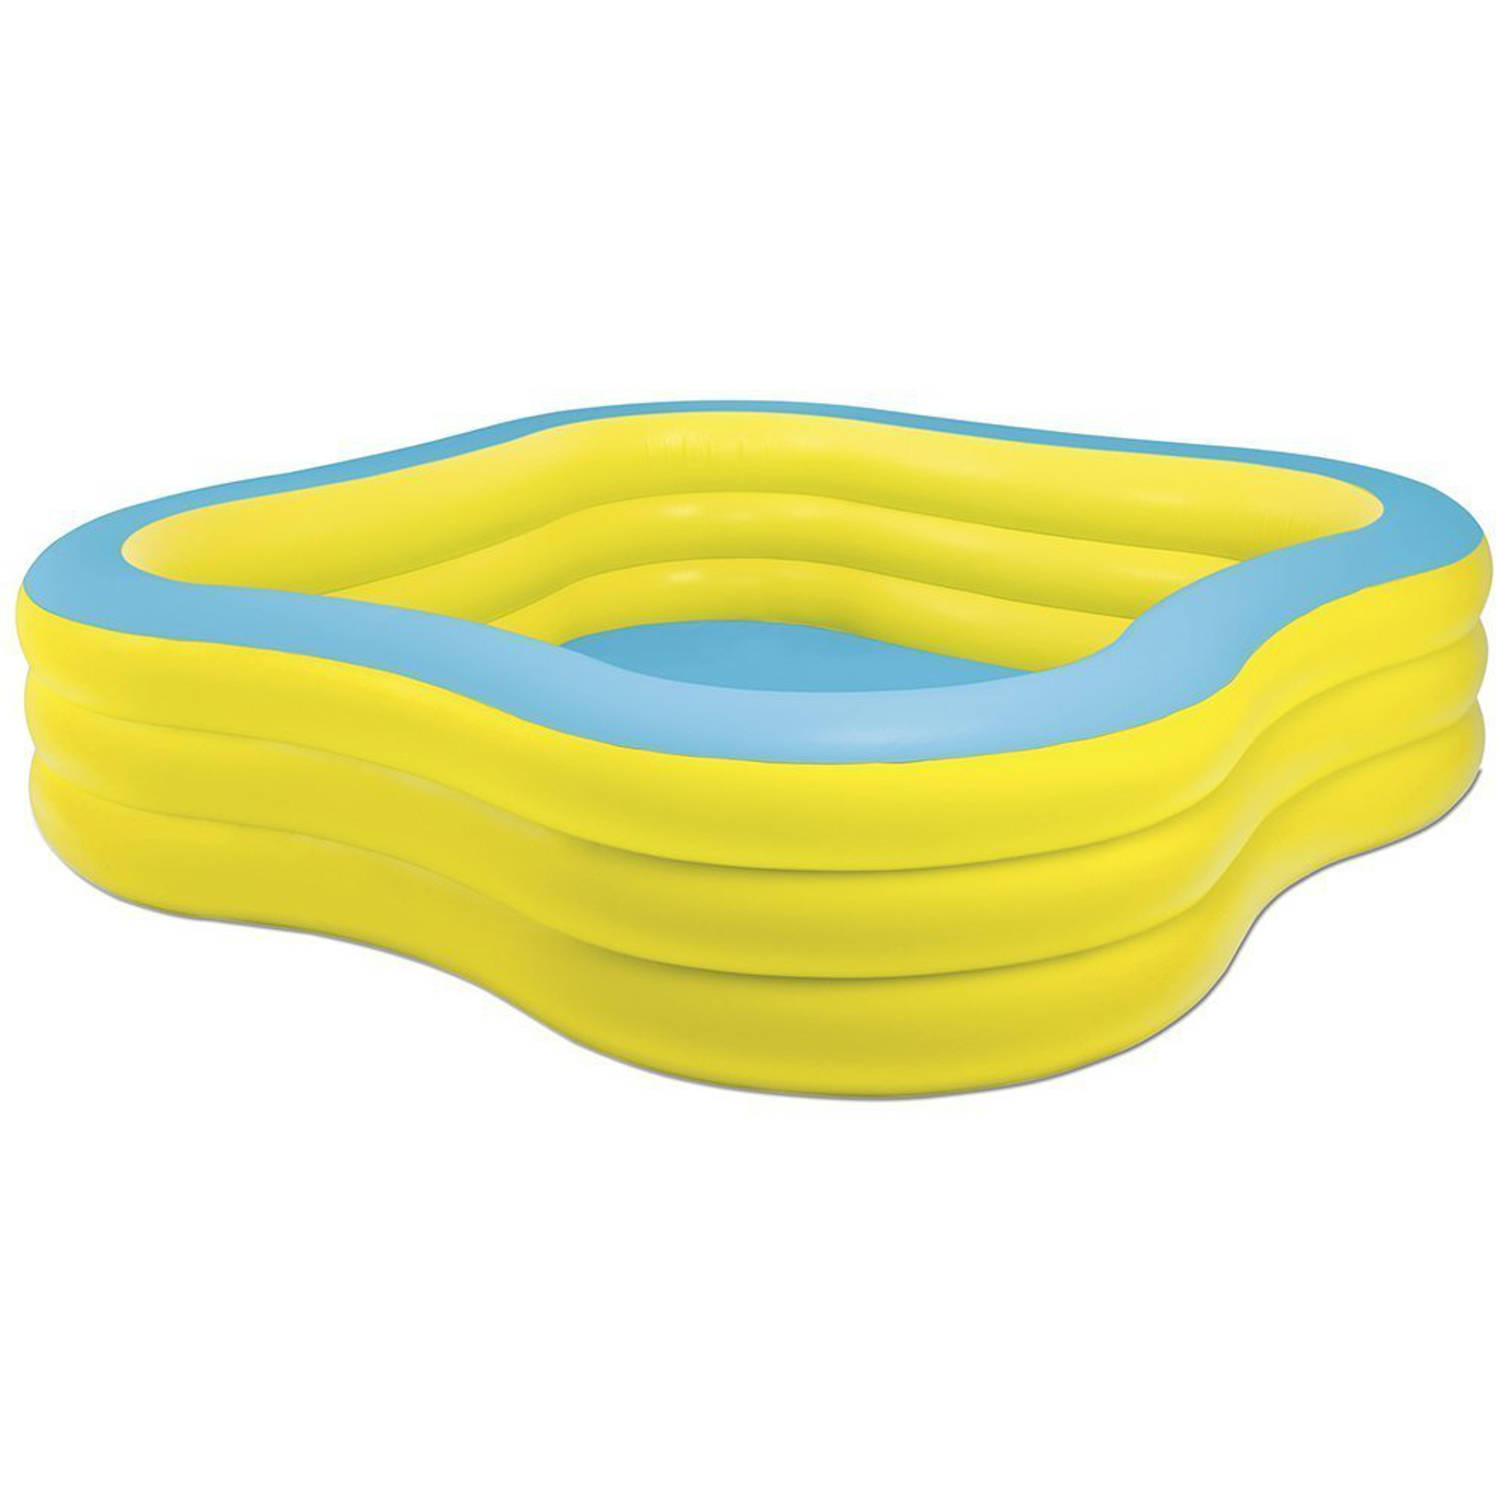 Intex Inflatable Beach Wave Swim Center Family Pool, 90" x 90" x 22" - image 3 of 3